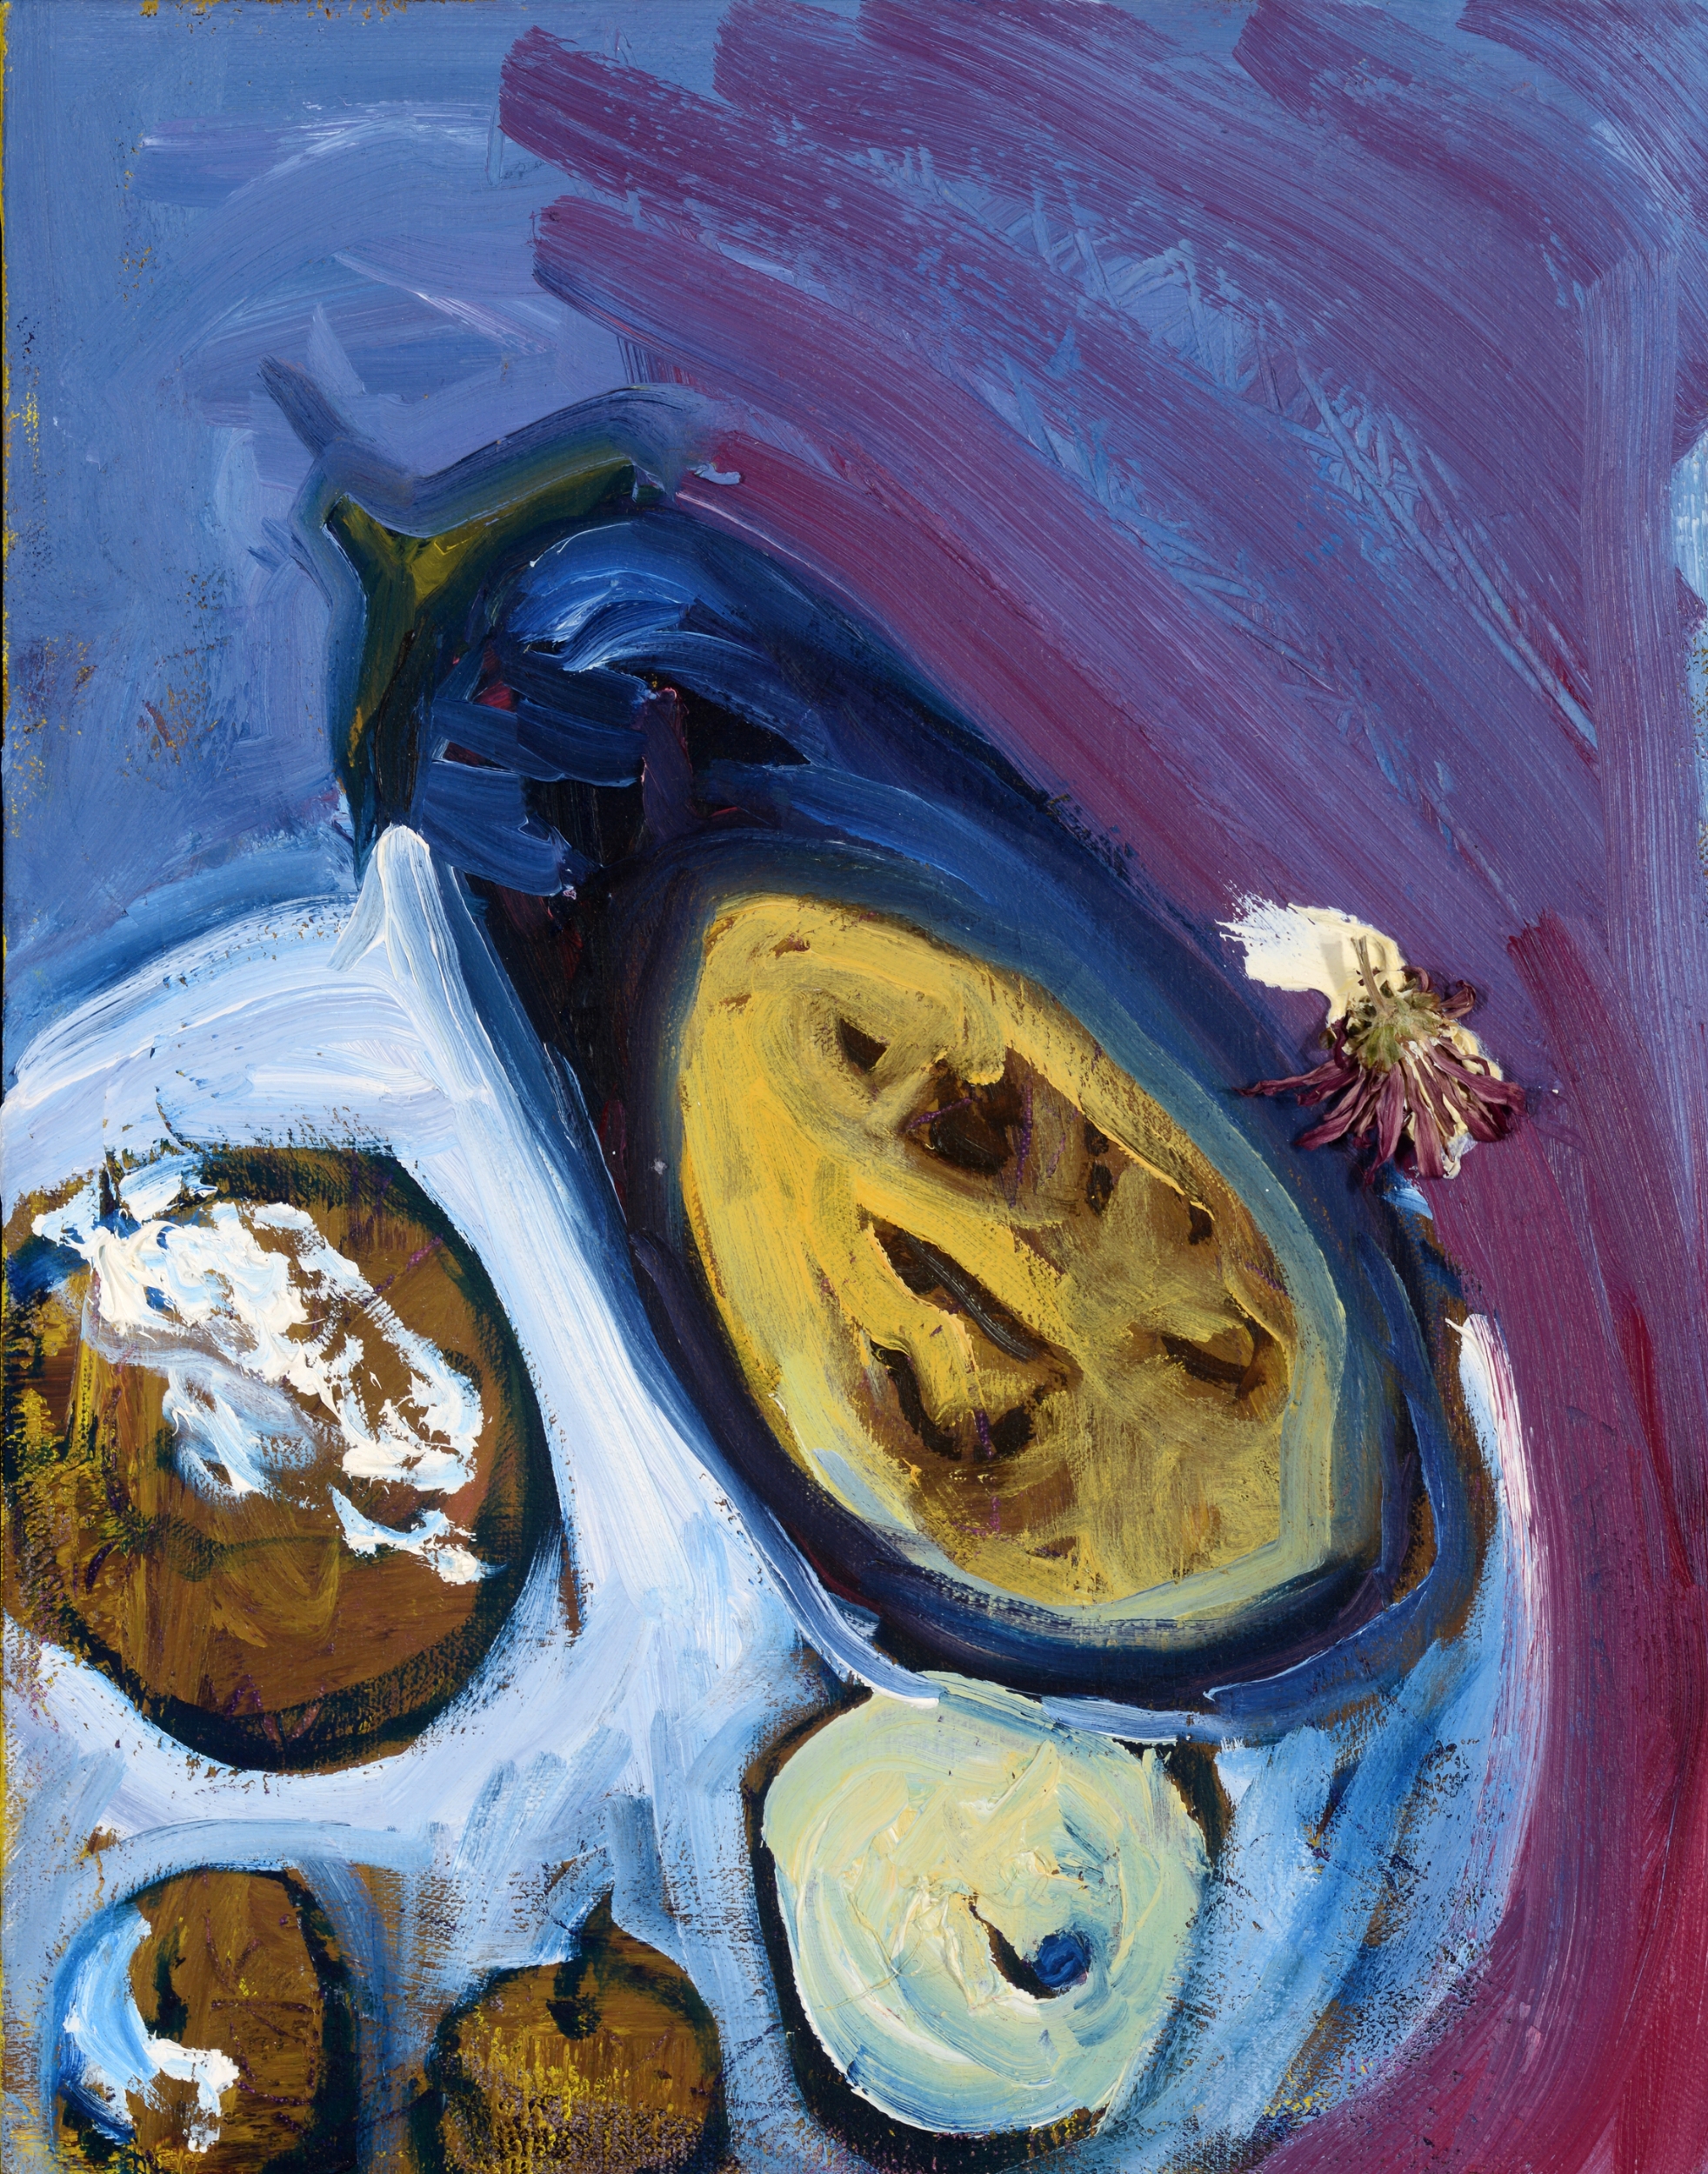 Aubergine. Oil and pressed flowers on canvas. 2014.